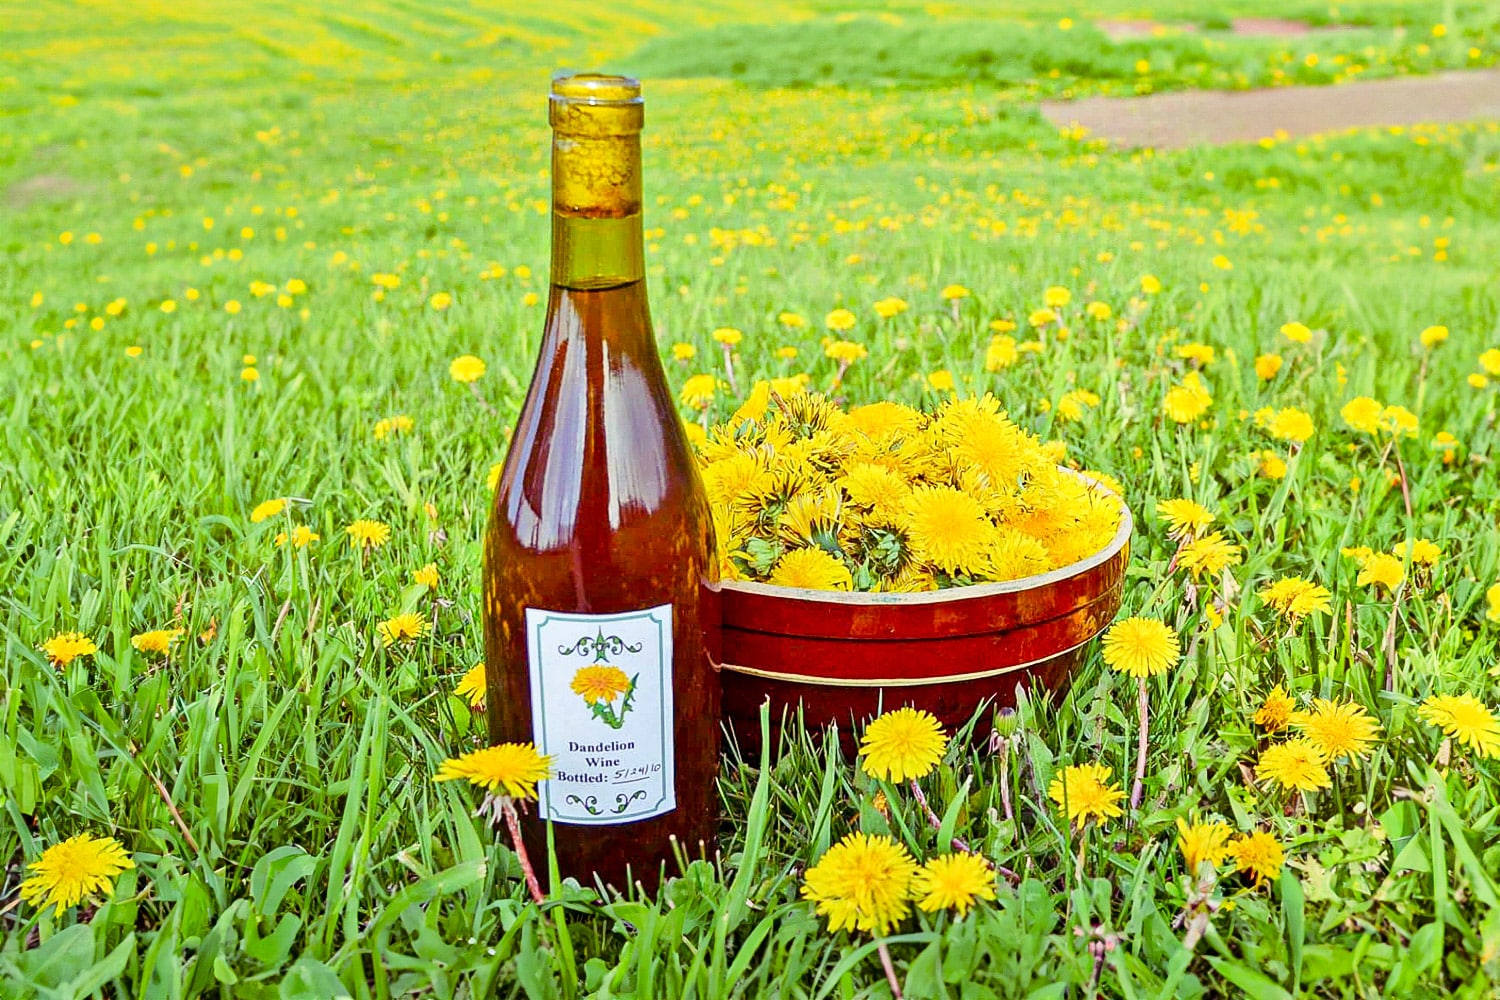 https://commonsensehome.com/wp-content/uploads/2020/02/dandelion-wine-recipe-flower-field-2.jpg